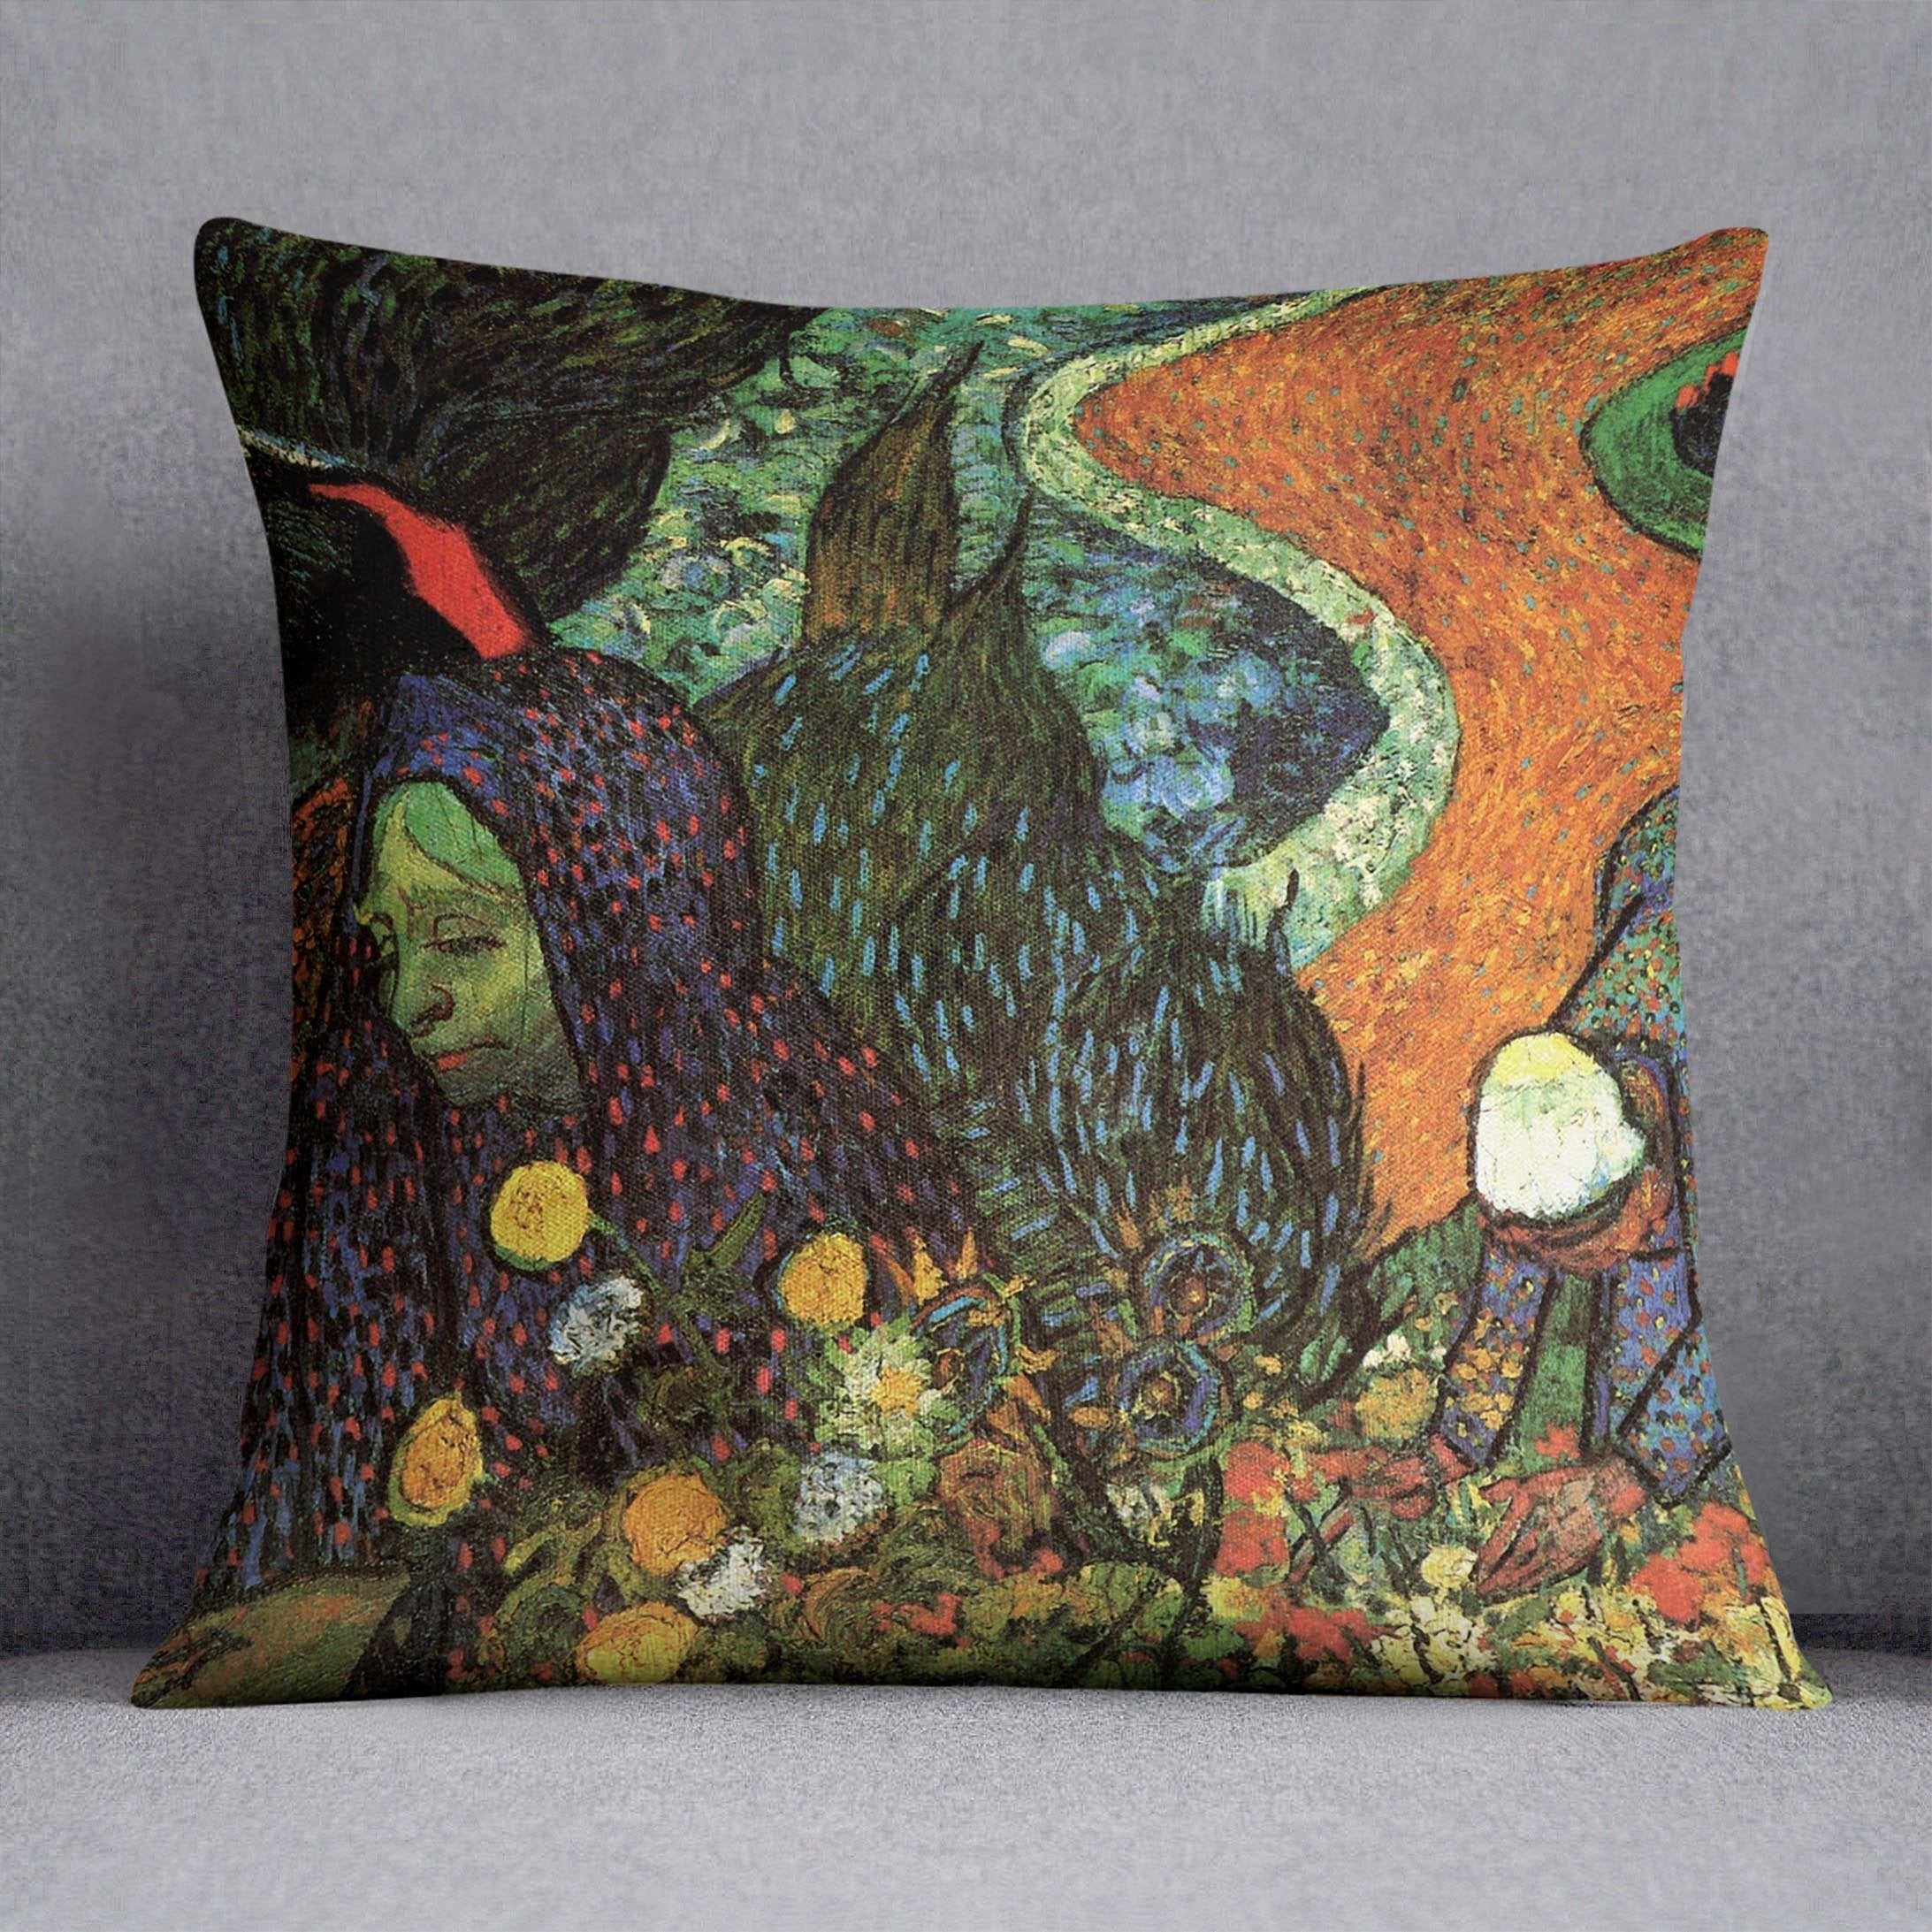 Memory of the Garden at Etten by Van Gogh Throw Pillow